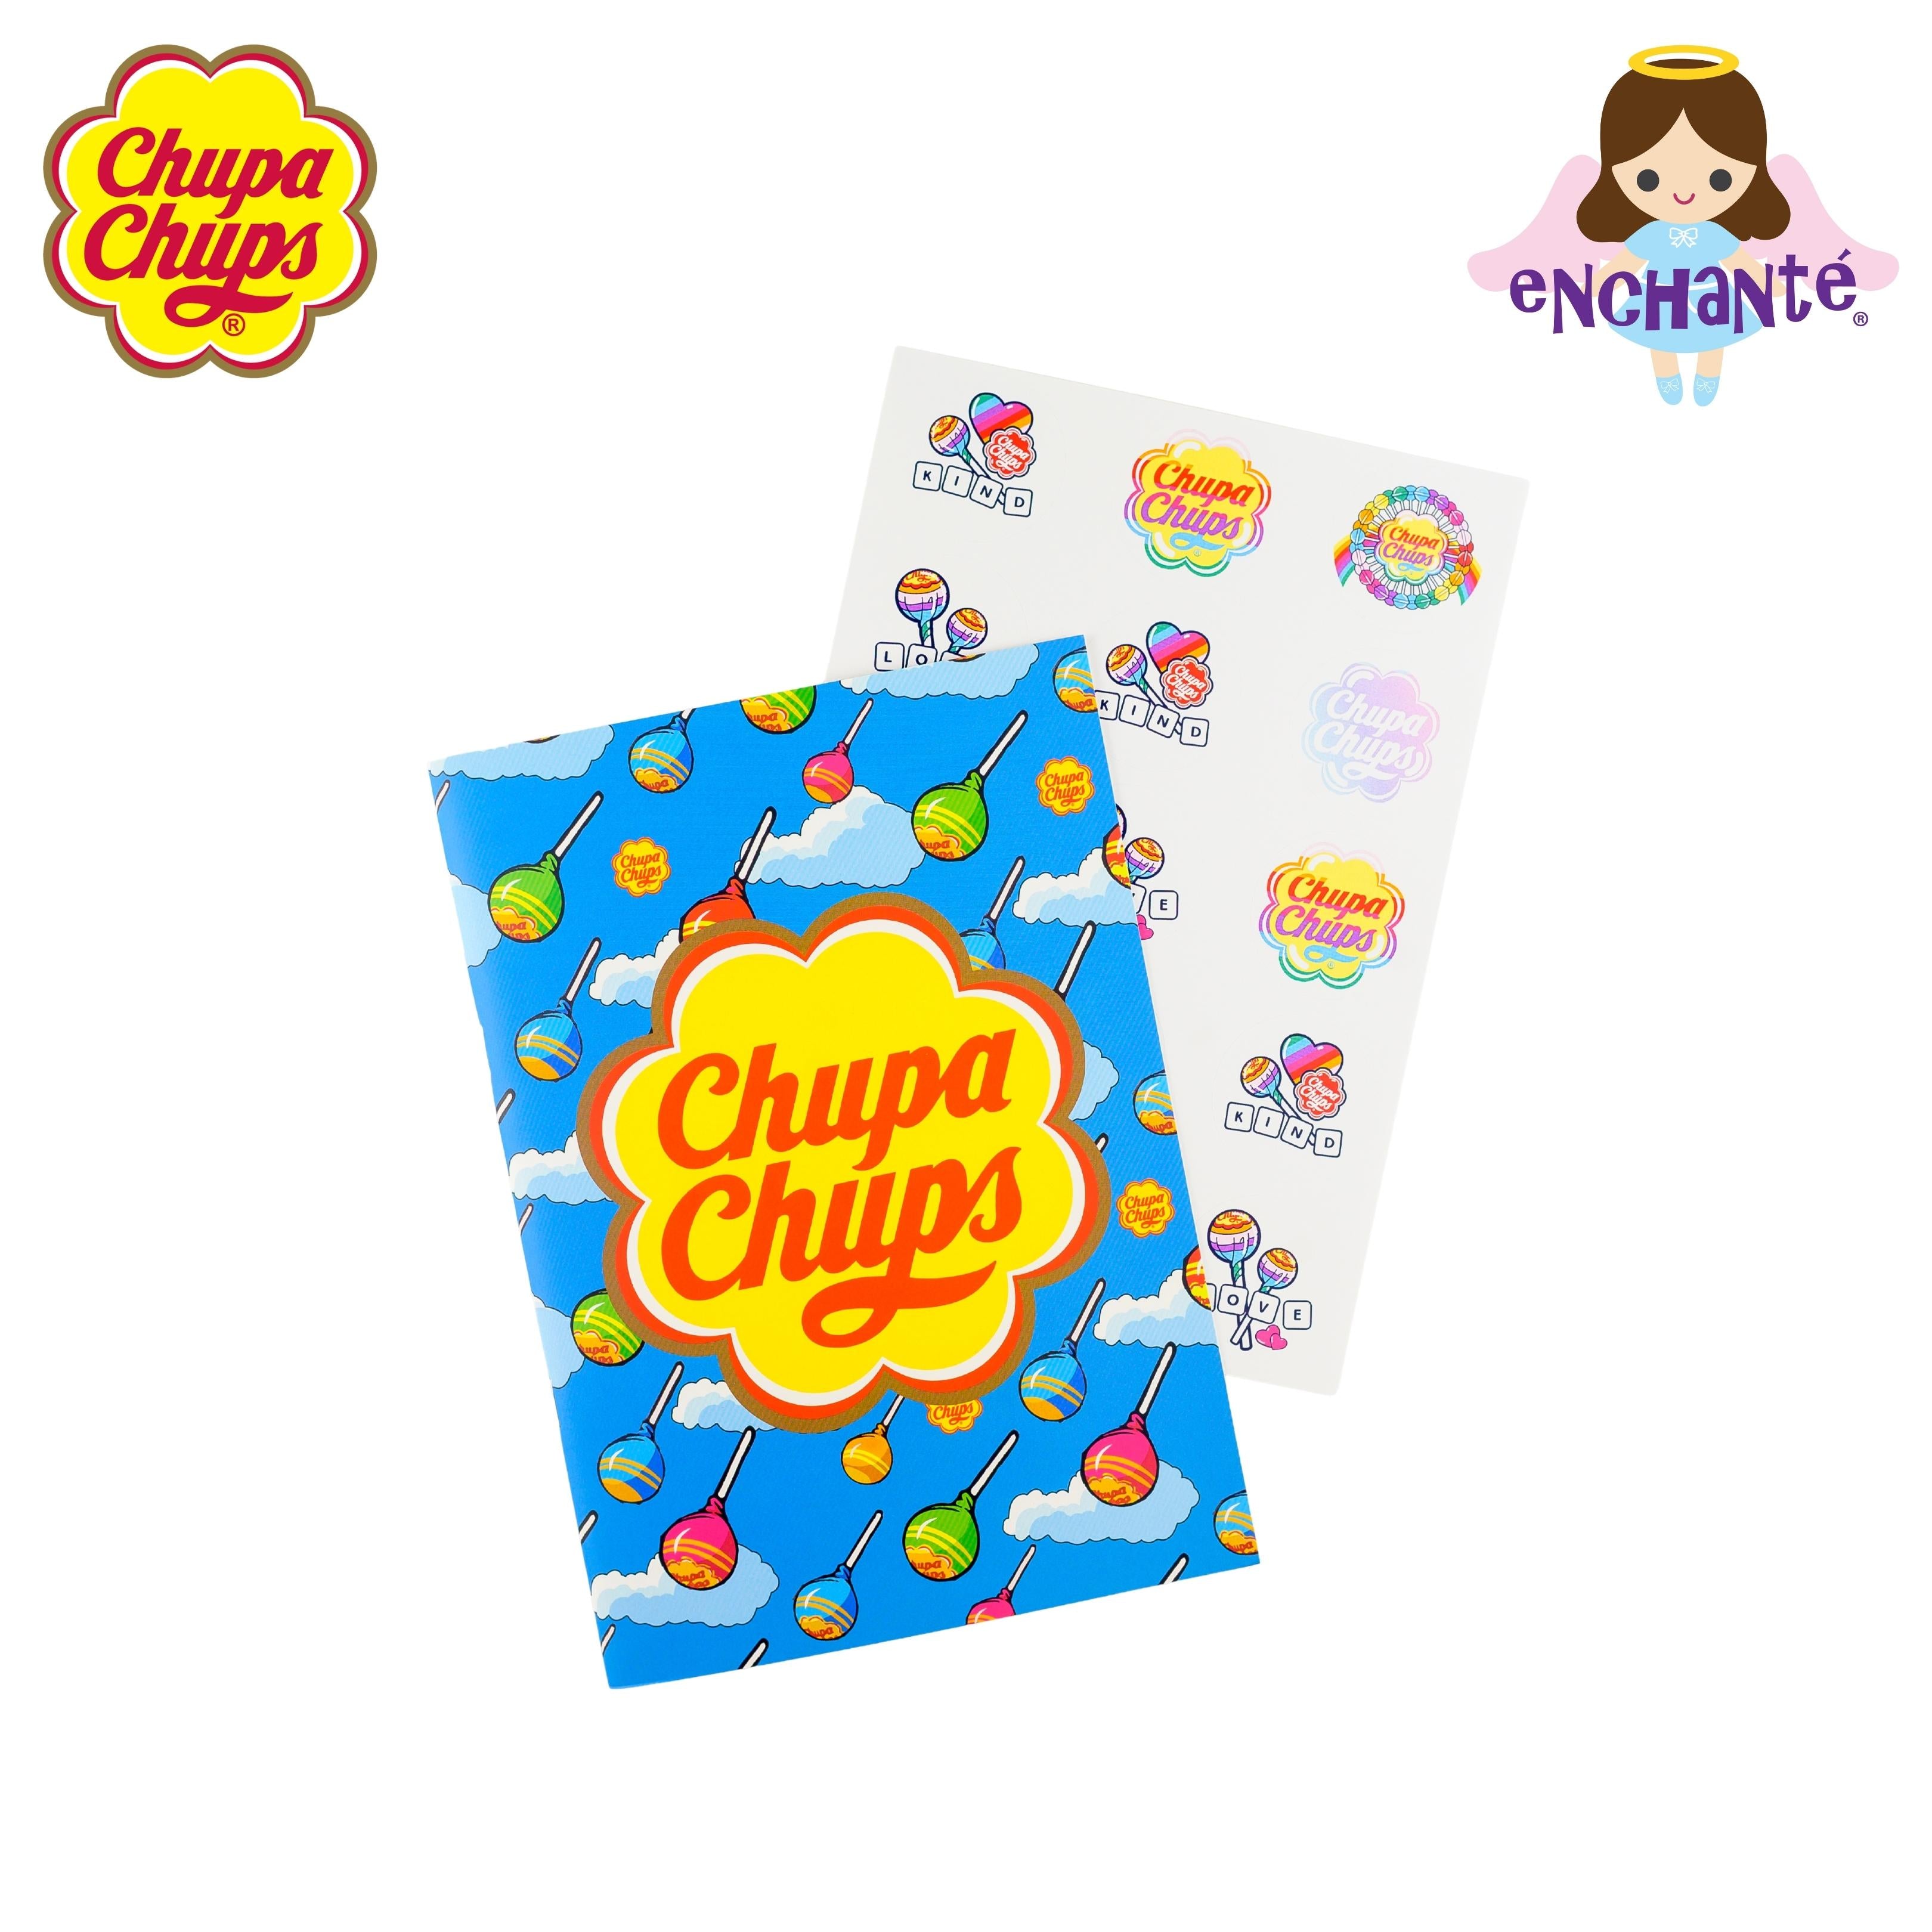 Chupa Chups x Enchante Notebook (Blue)